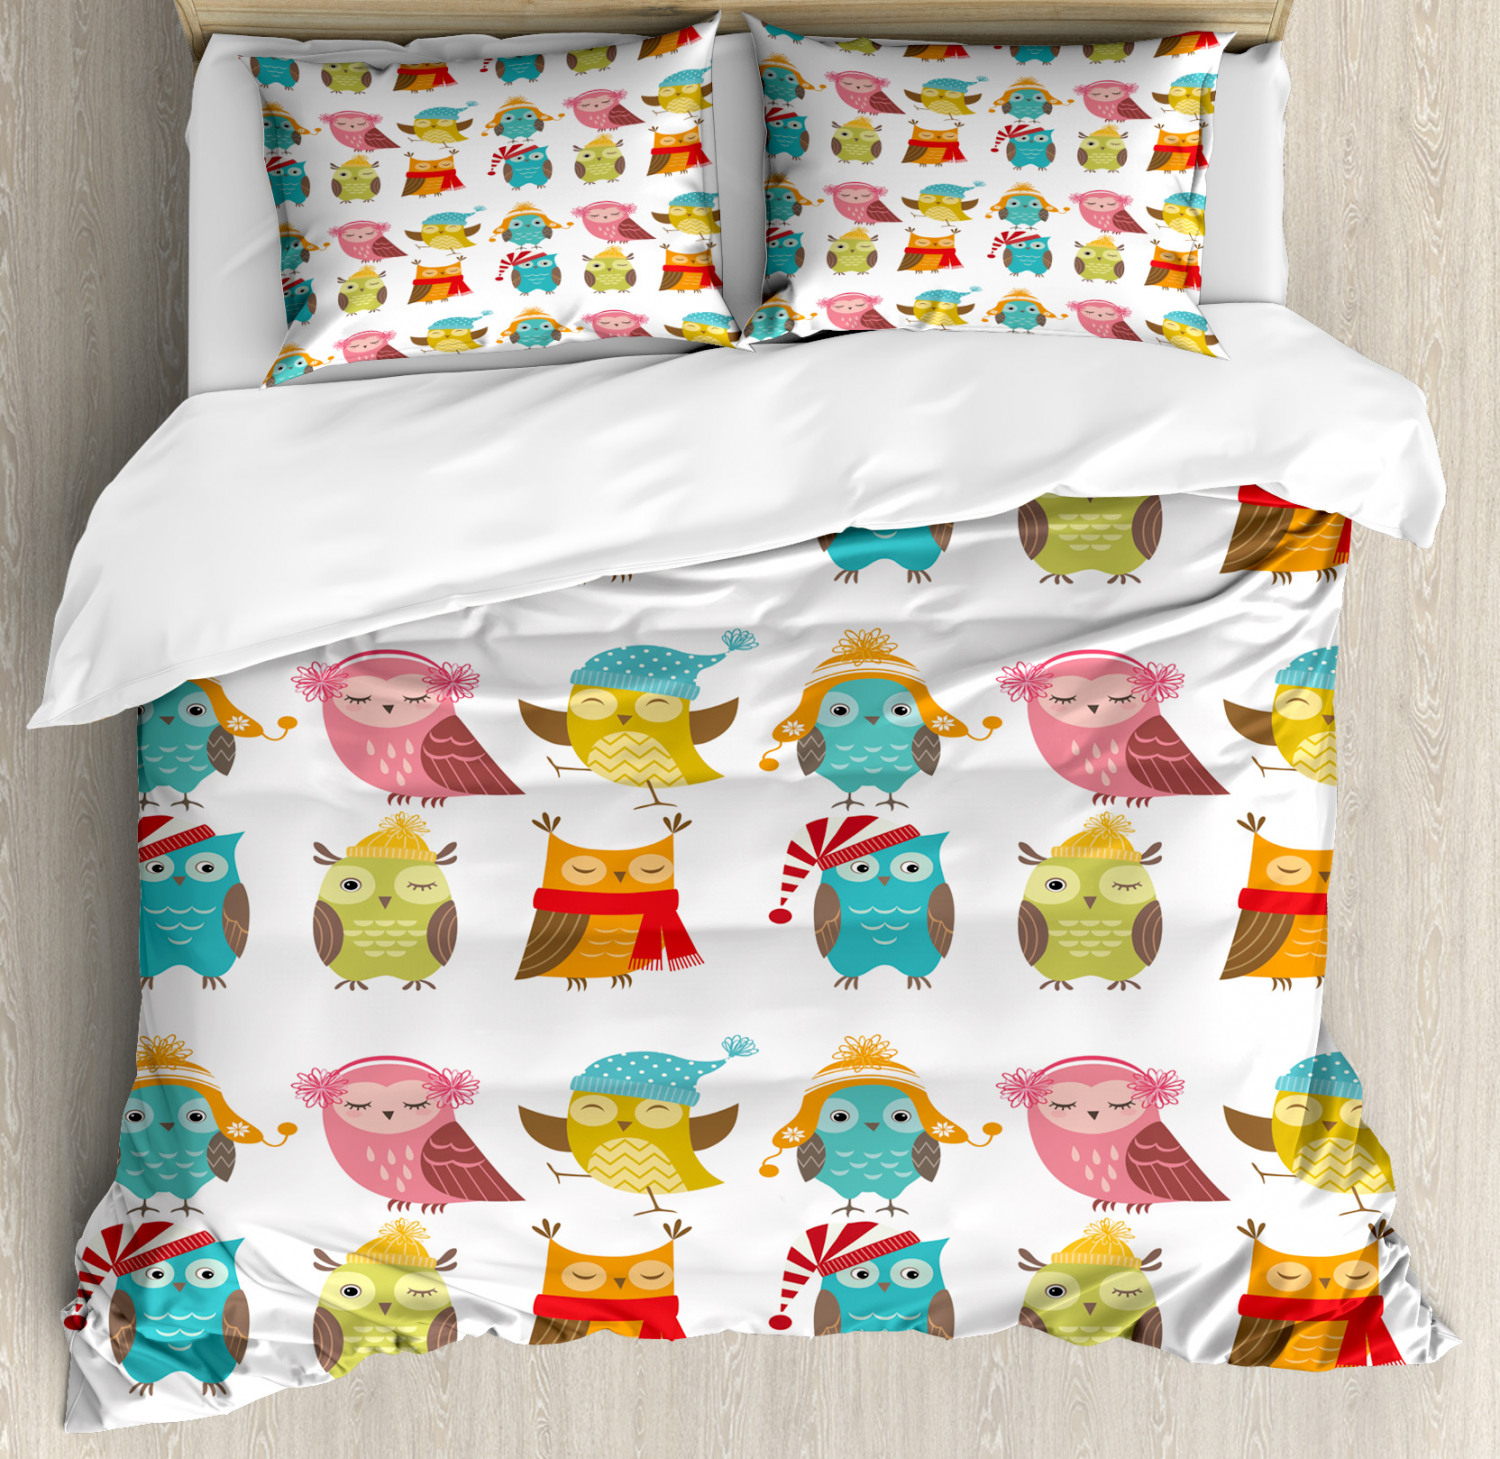 Winter Duvet Cover Set With Pillow Shams Cute Cartoon Funny Owls